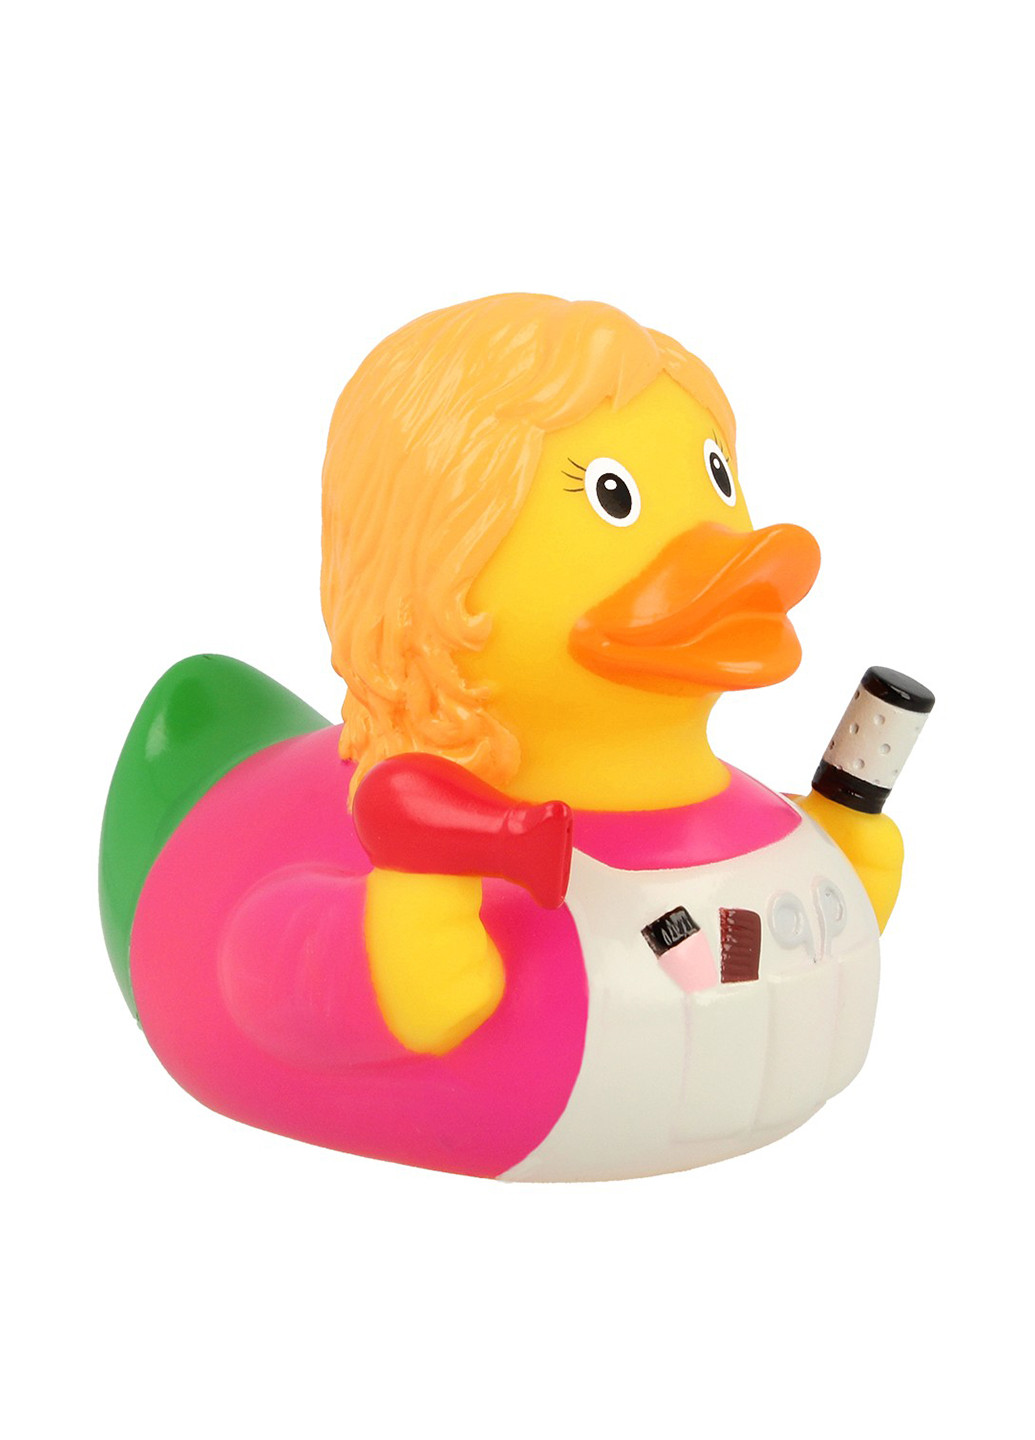 Игрушка для купания Утка Парикмахер, 8,5x8,5x7,5 см Funny Ducks (250618798)